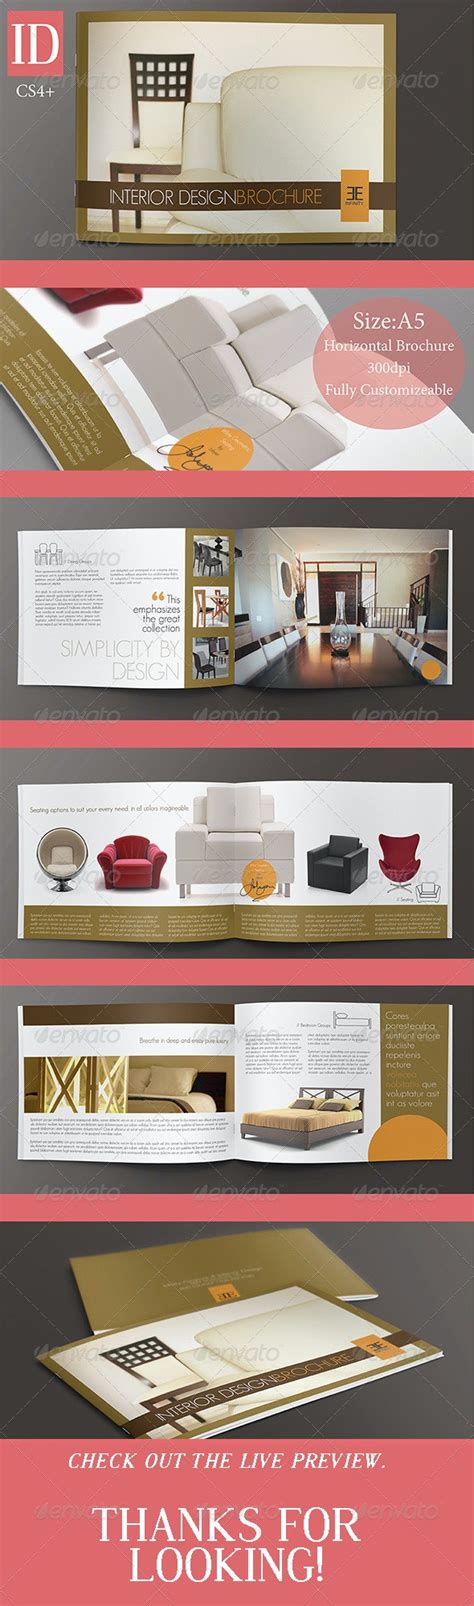 modern home interior design brochurecatalog  mailchelle graphicriver